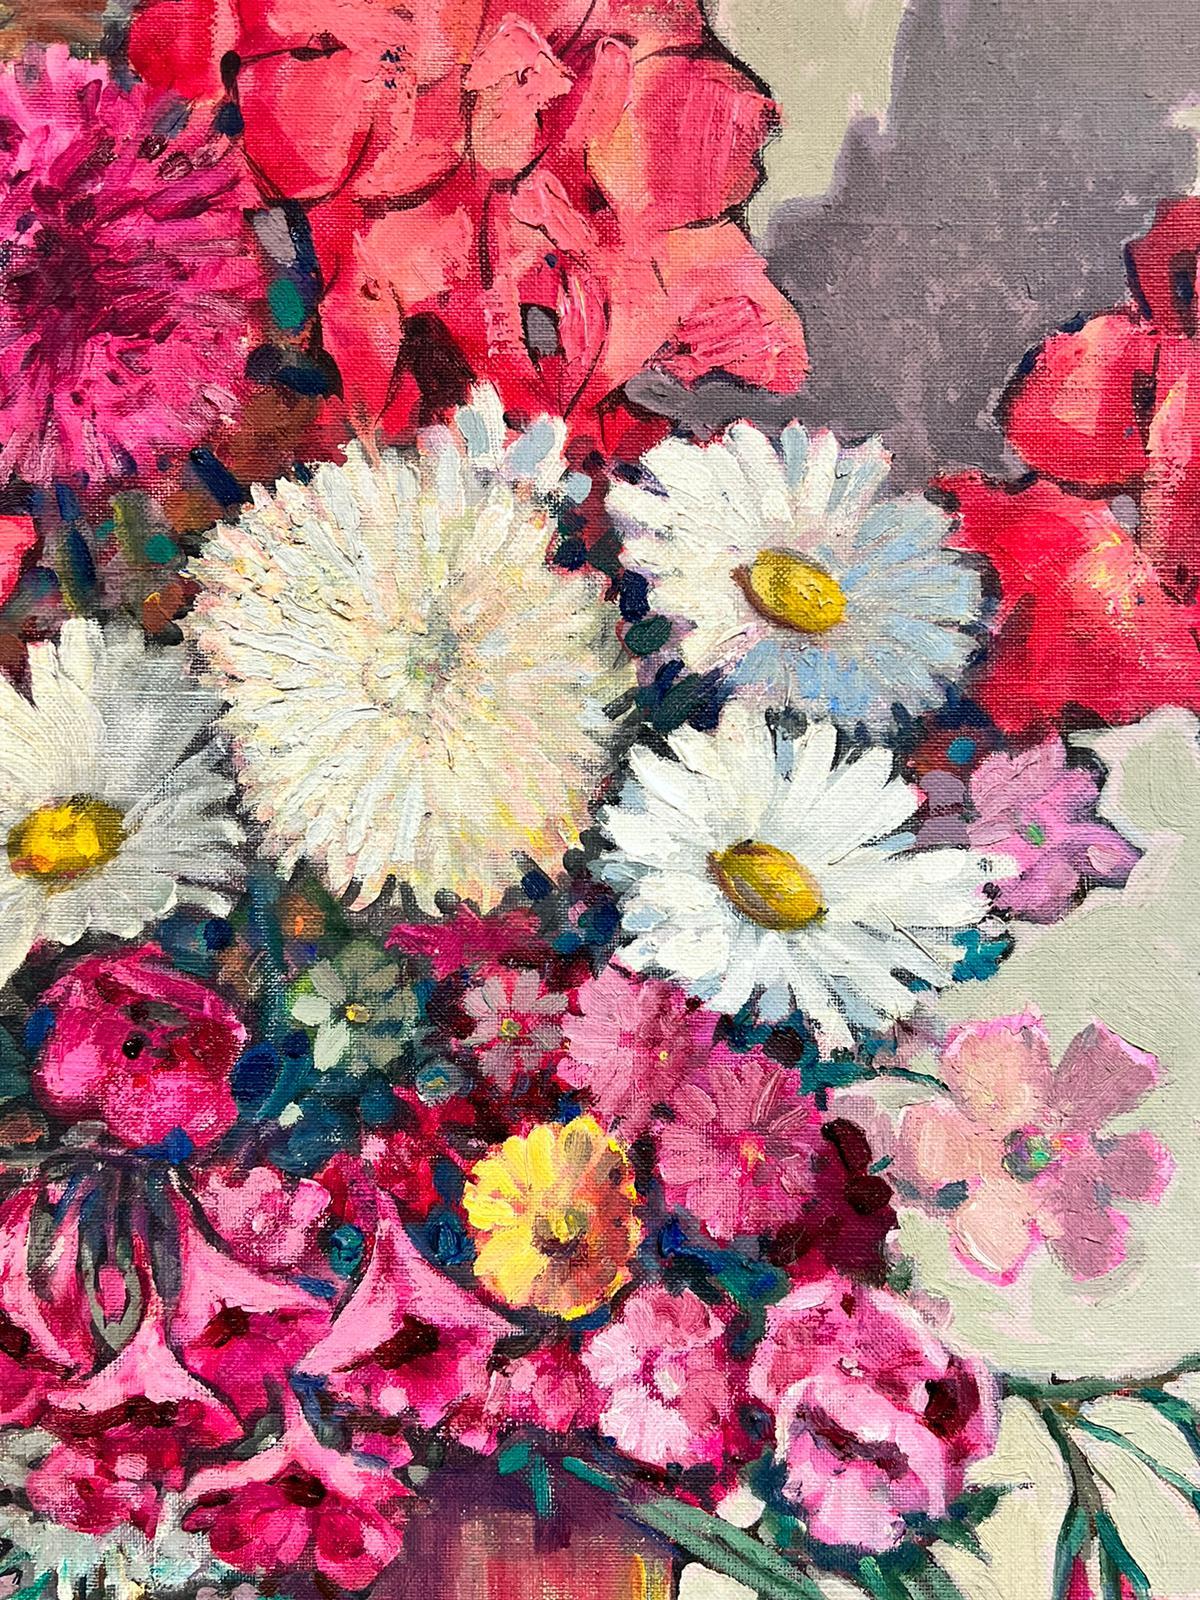 Huge 1960's European Still Life Burst of Color Flowers in Vase - Painting by 1960's Europen Oil